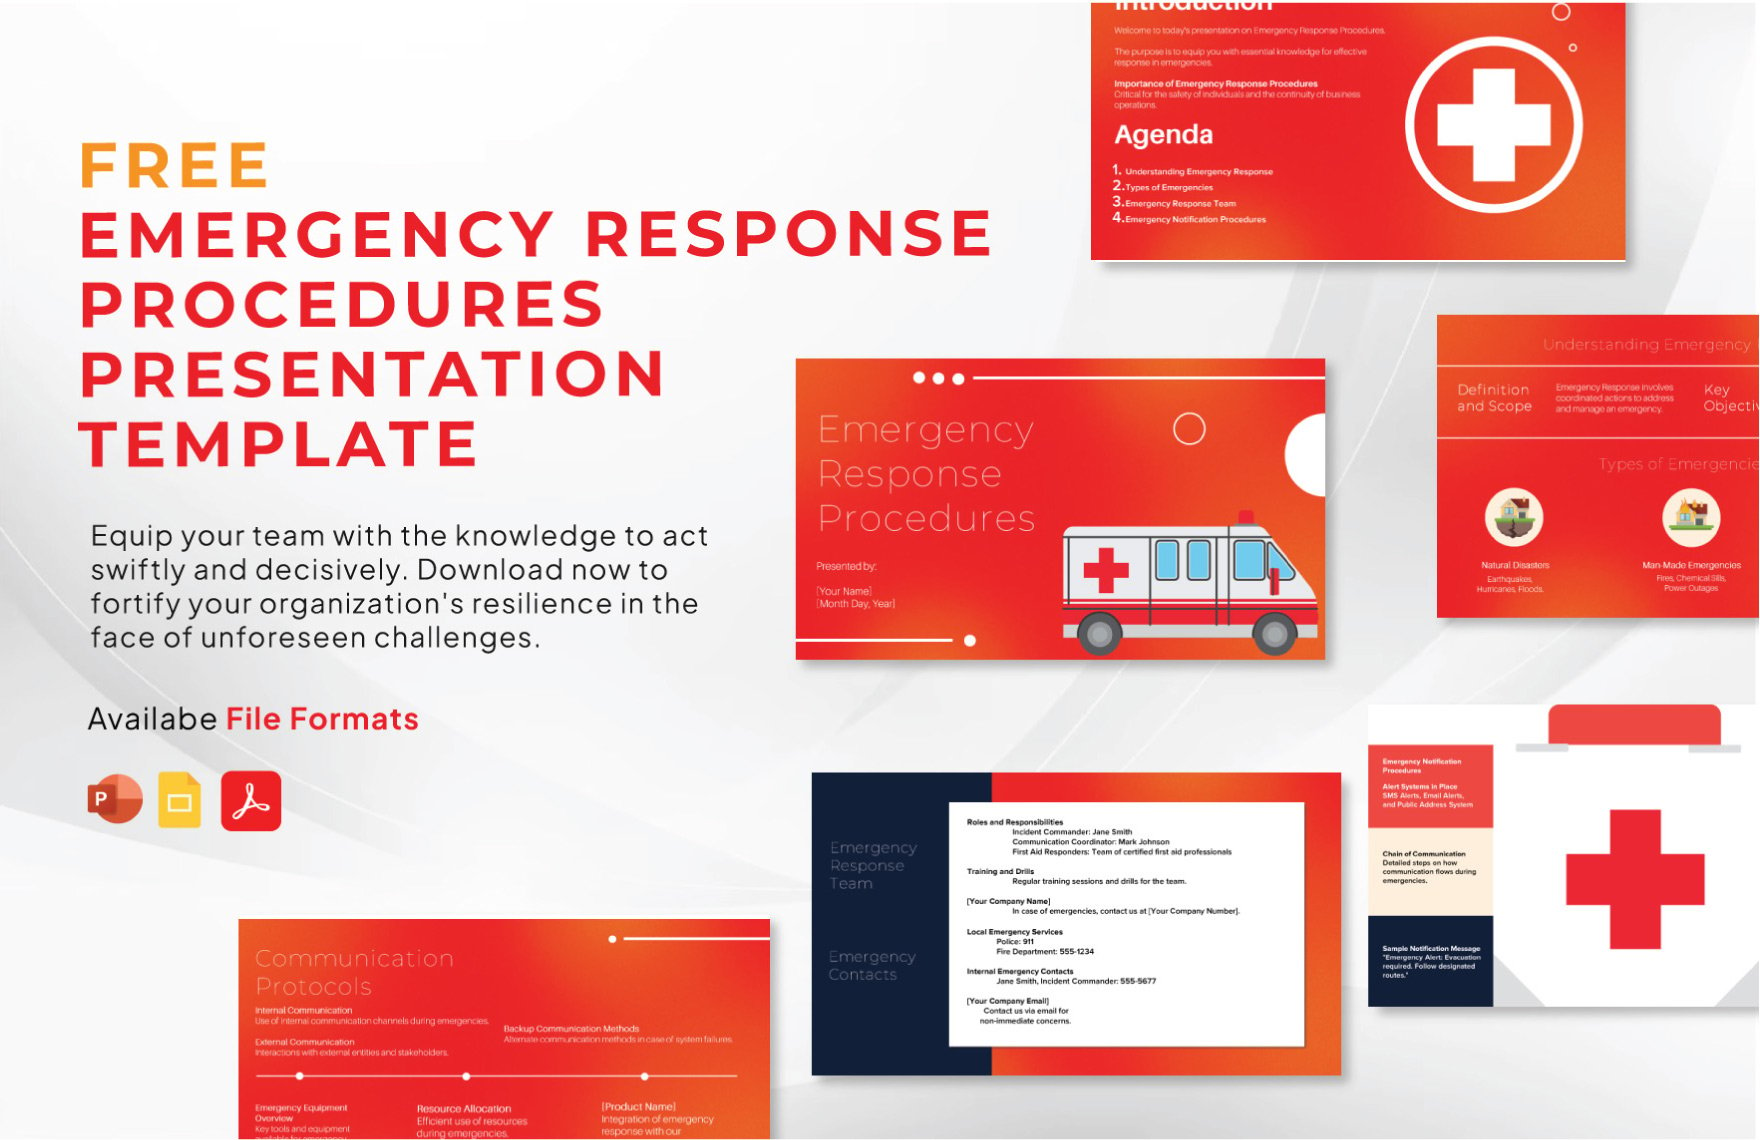 Free Emergency Response Procedures Presentation Template in Google Slides